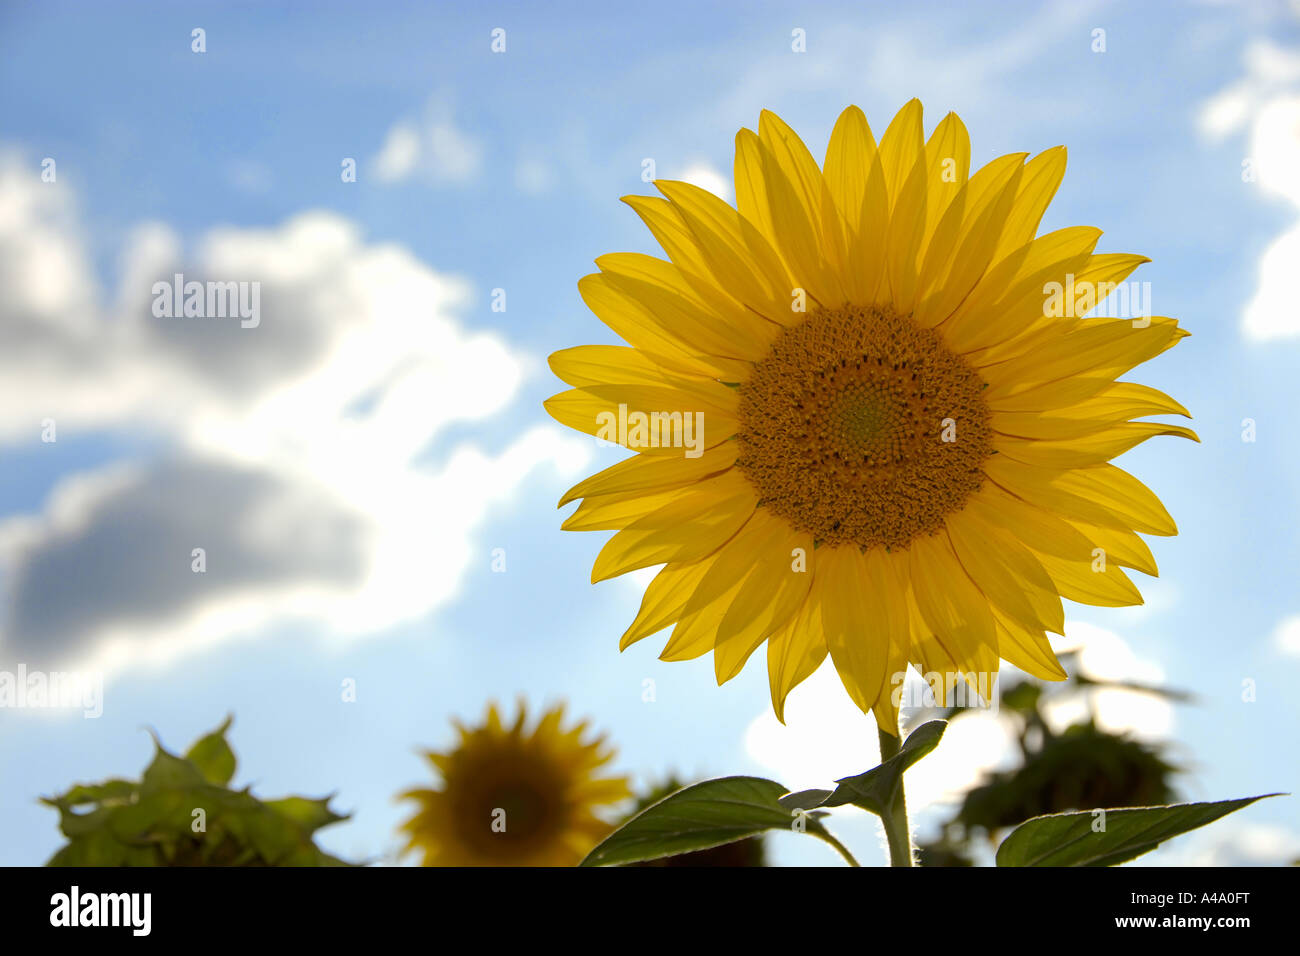 common sunflower (Helianthus annuus), inflorescence, Germany, NRW Stock Photo